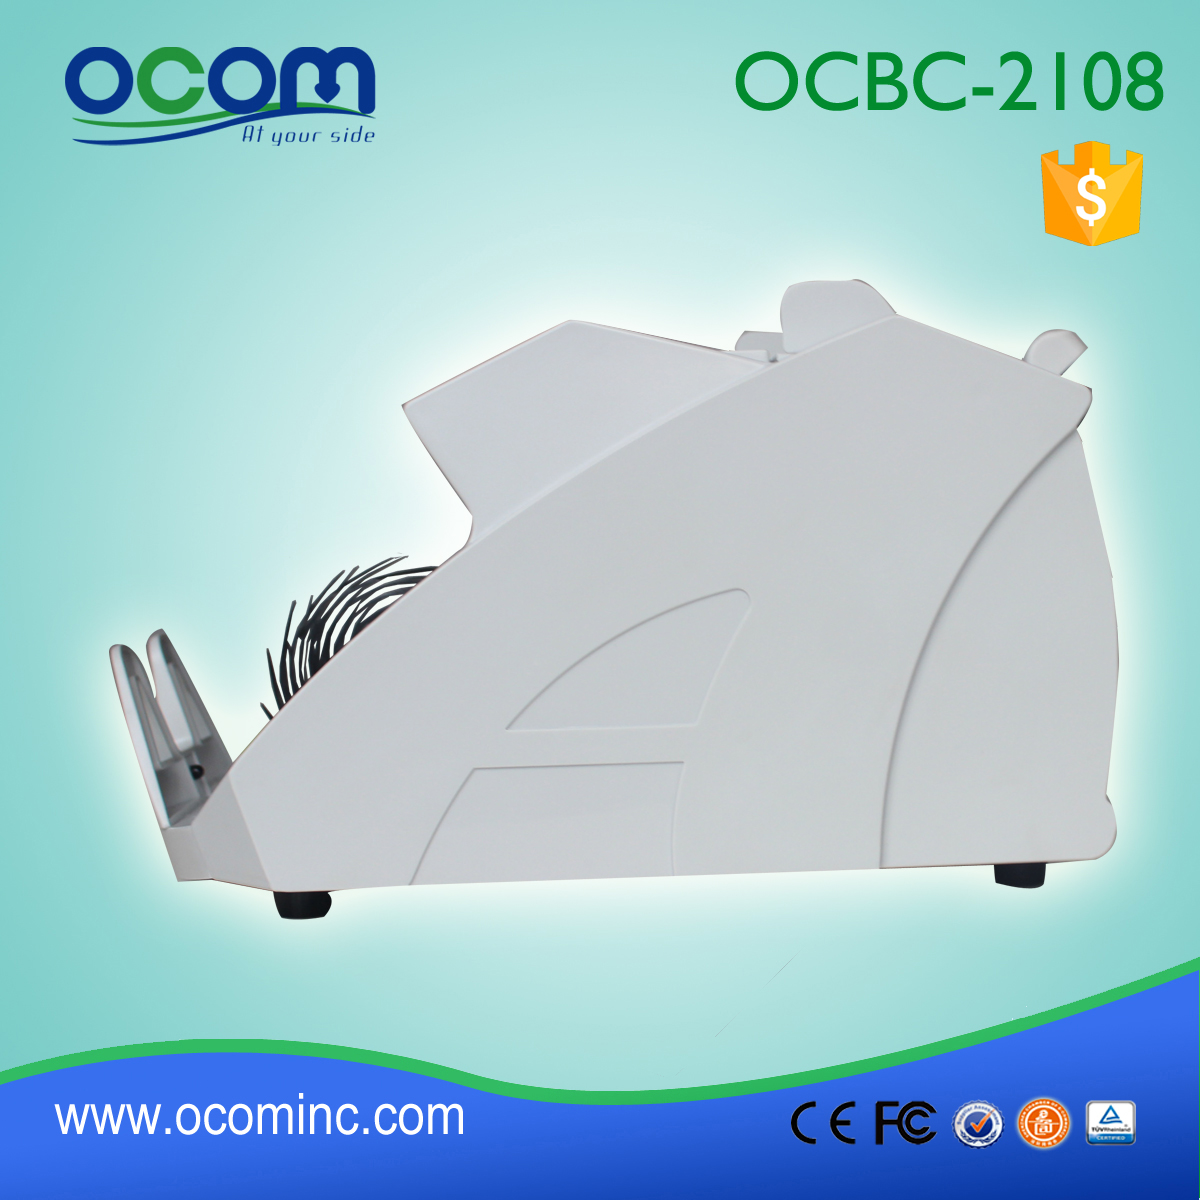 (OCBC-2108) - OCOM έκανε το 2016 νεότερο τραπεζογραμματίων σε αντίθεση με UV mg